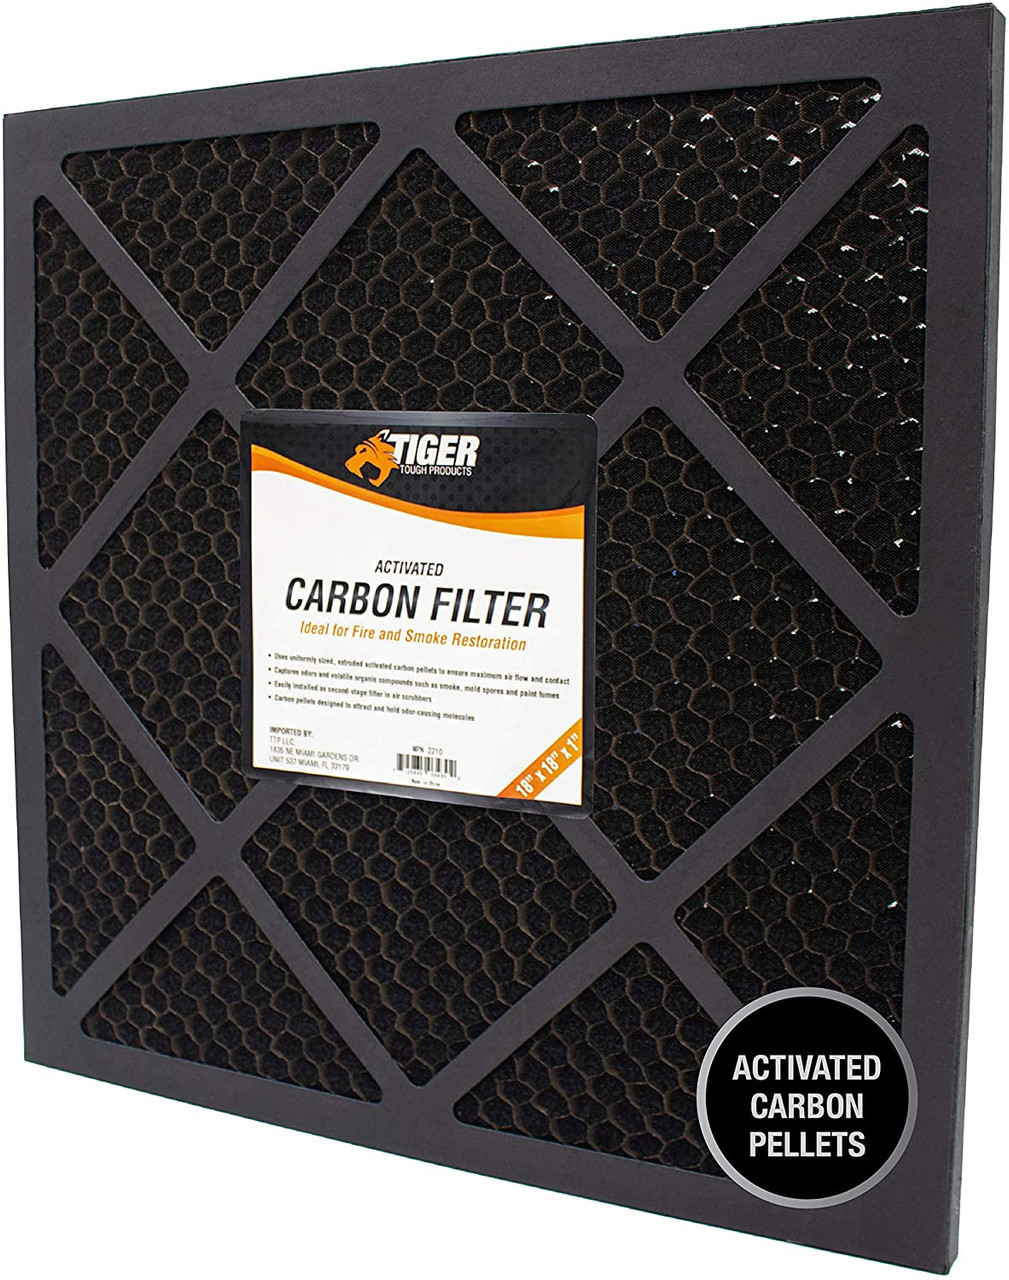 Tiger Tough Carbon Filter 16x16x1 - CASE of 4ea